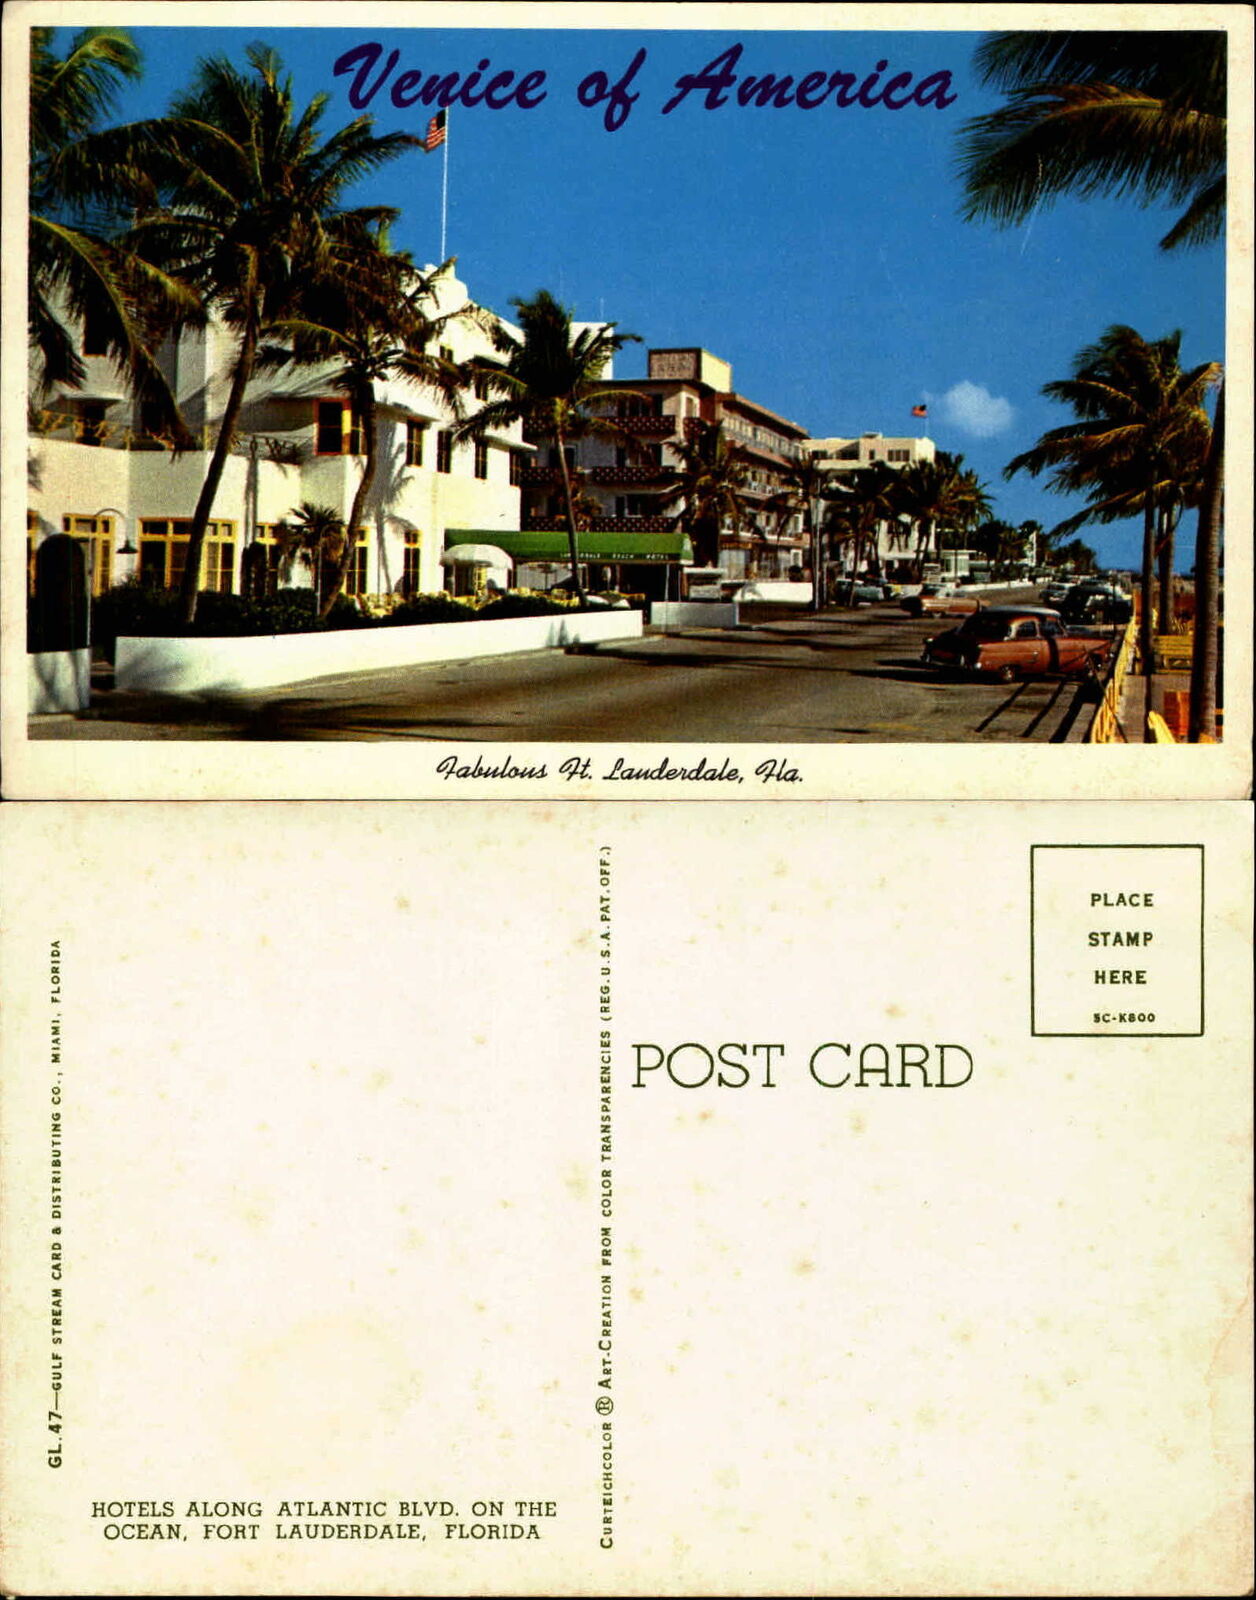 Venice of America Fort Lauderdale FL Atlantic Blvd hotels 1950s cars